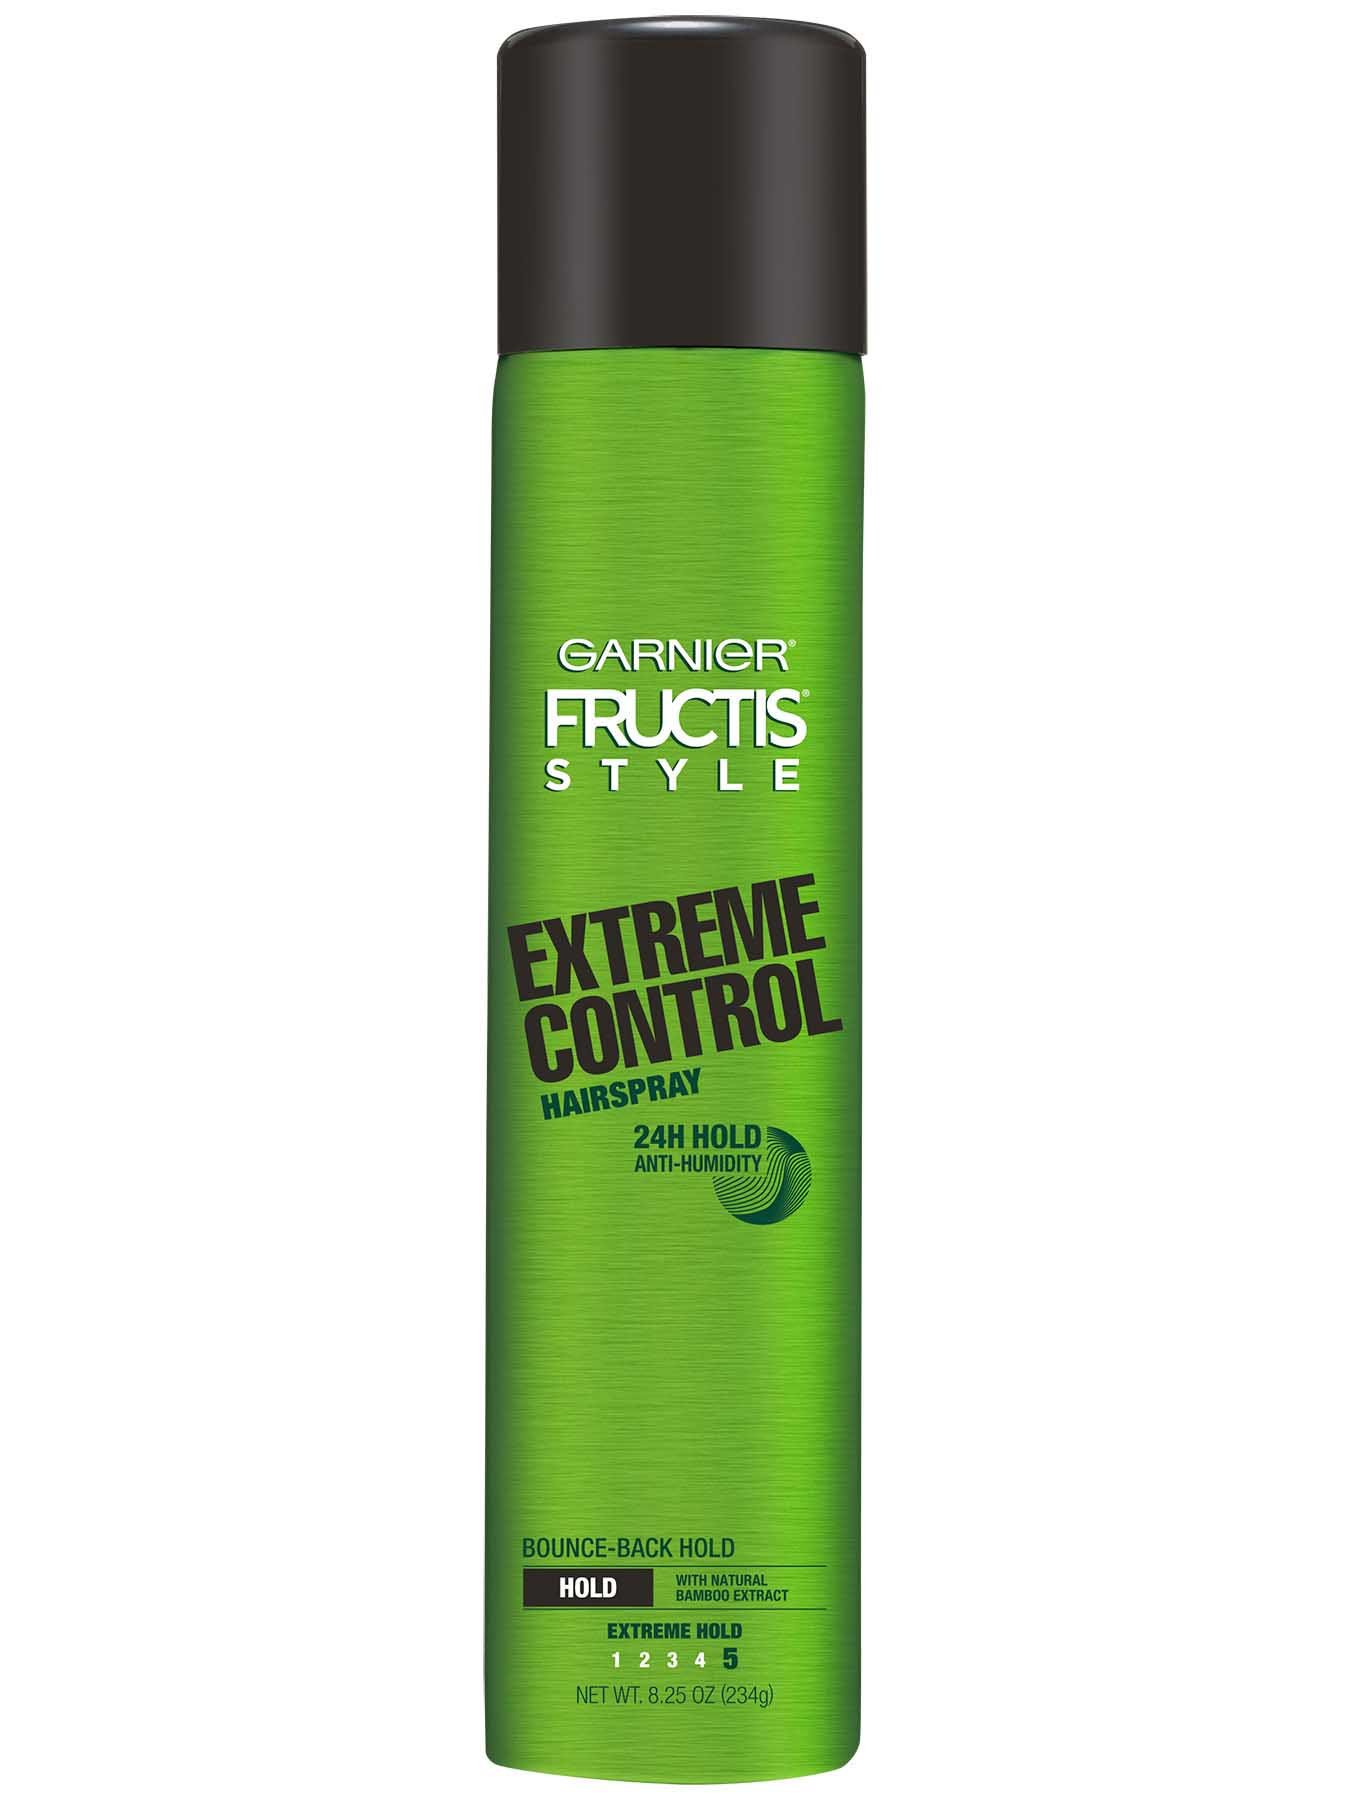 Extreme Control Anti-Humidity Aerosol Hairspray - Garnier Fructis